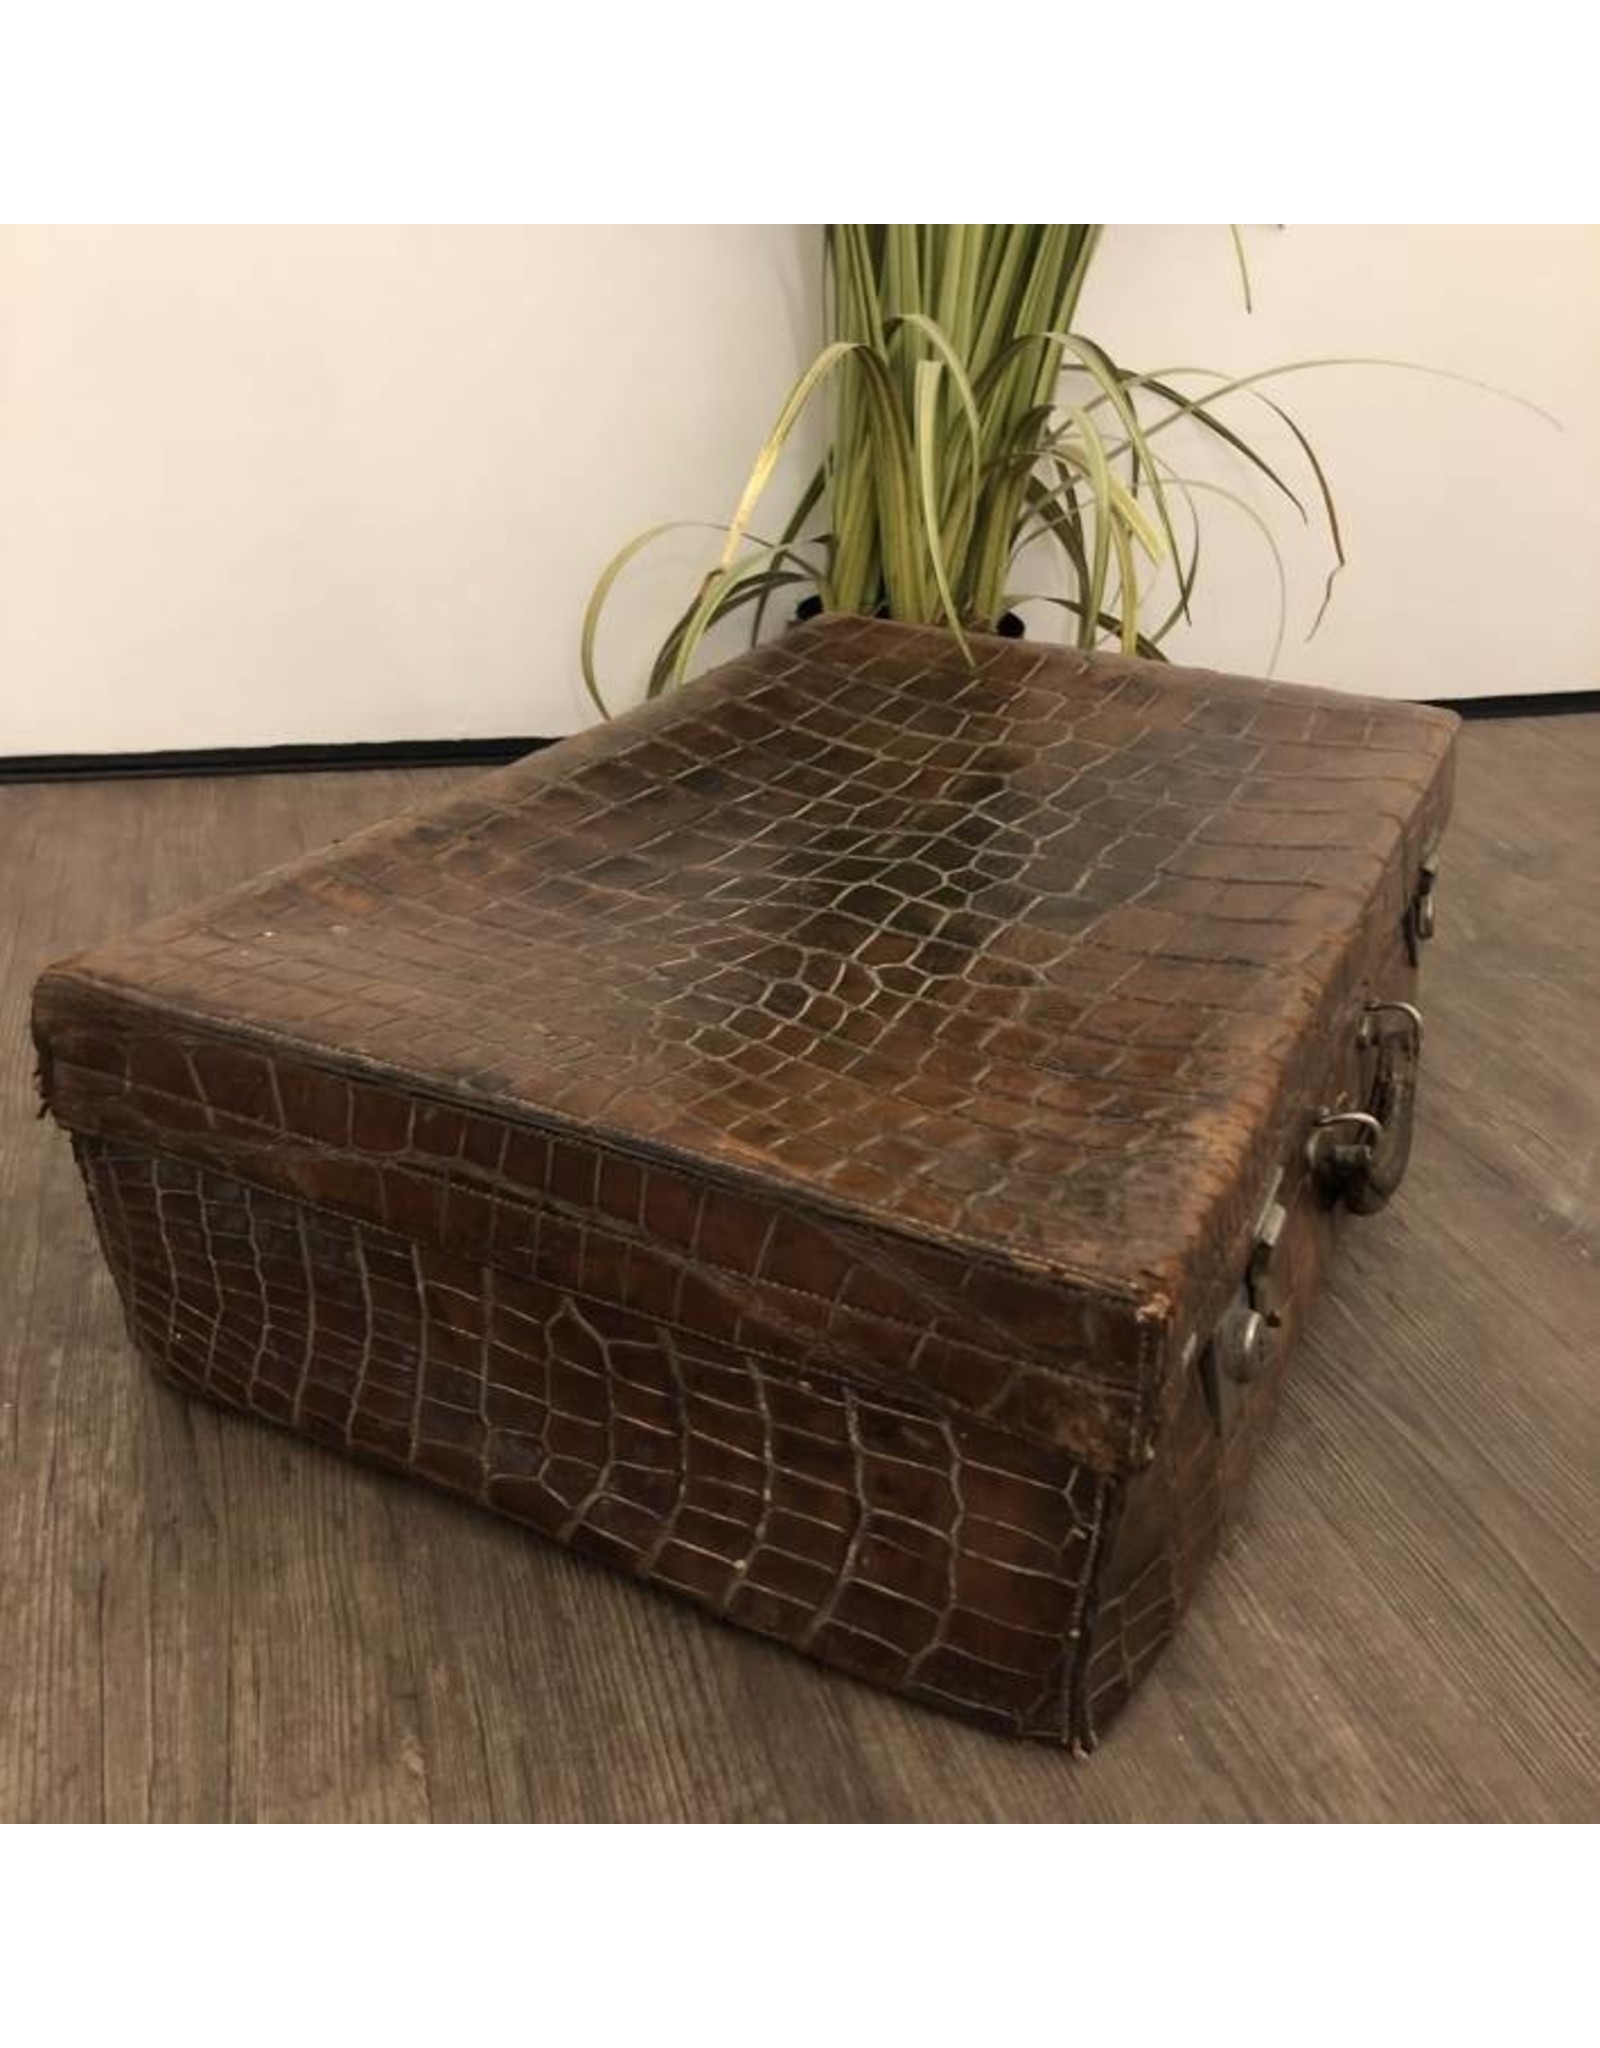 Suitcase - vintage alligator